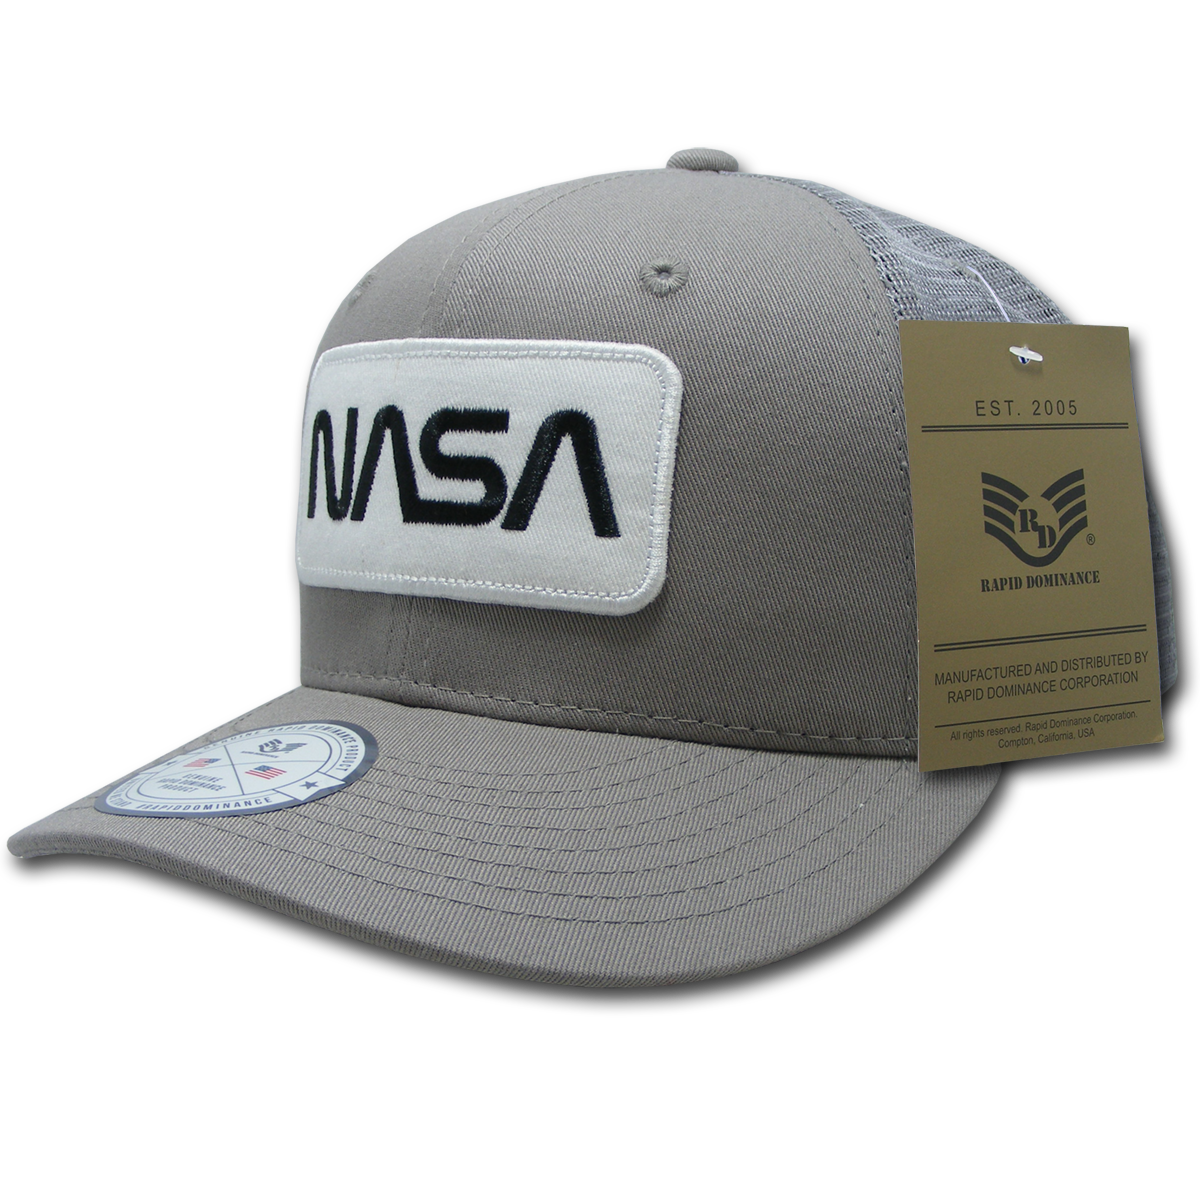 NASA Patch Caps